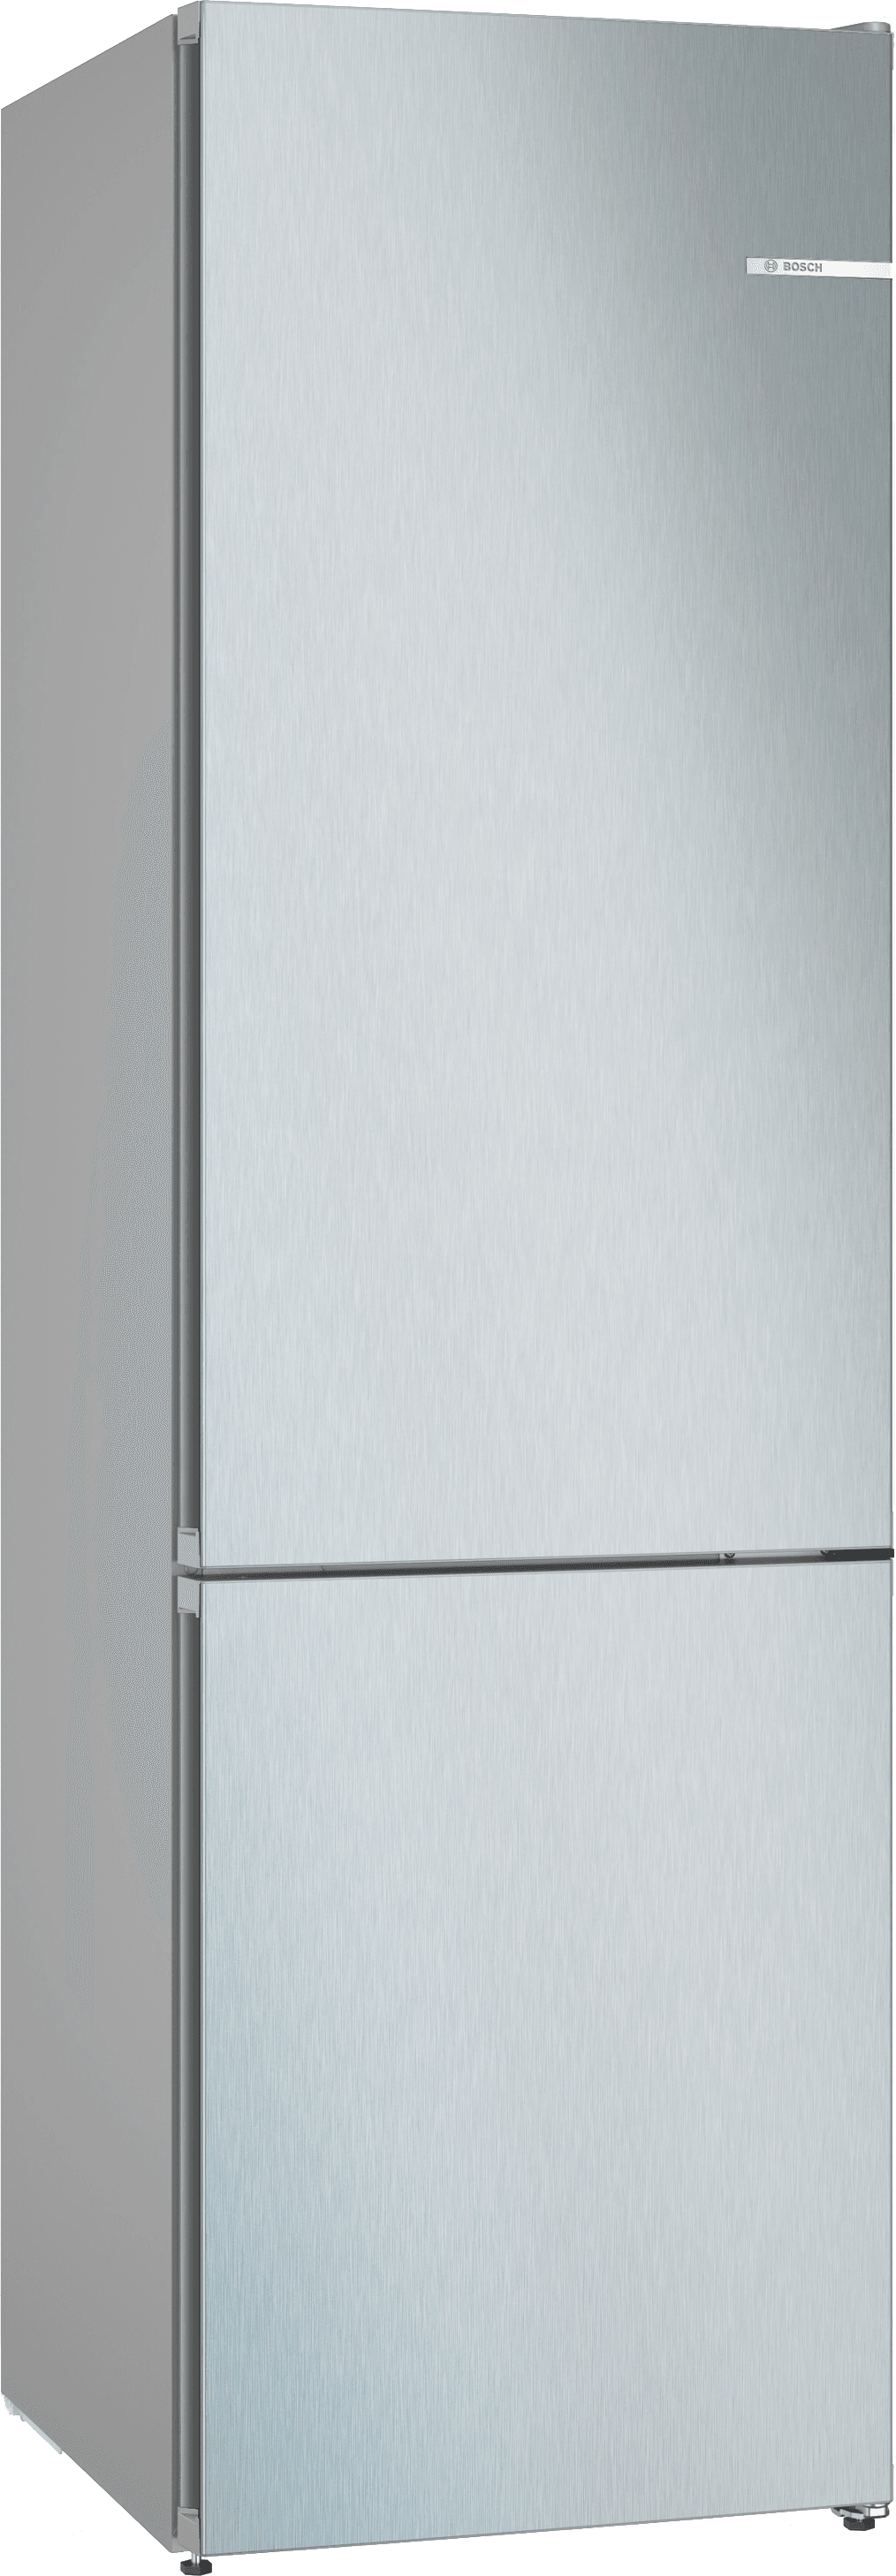 Bosch Series 4 KGN392LDFG 70/30 Frost Free Fridge Freezer - Silver - D Rated, Silver